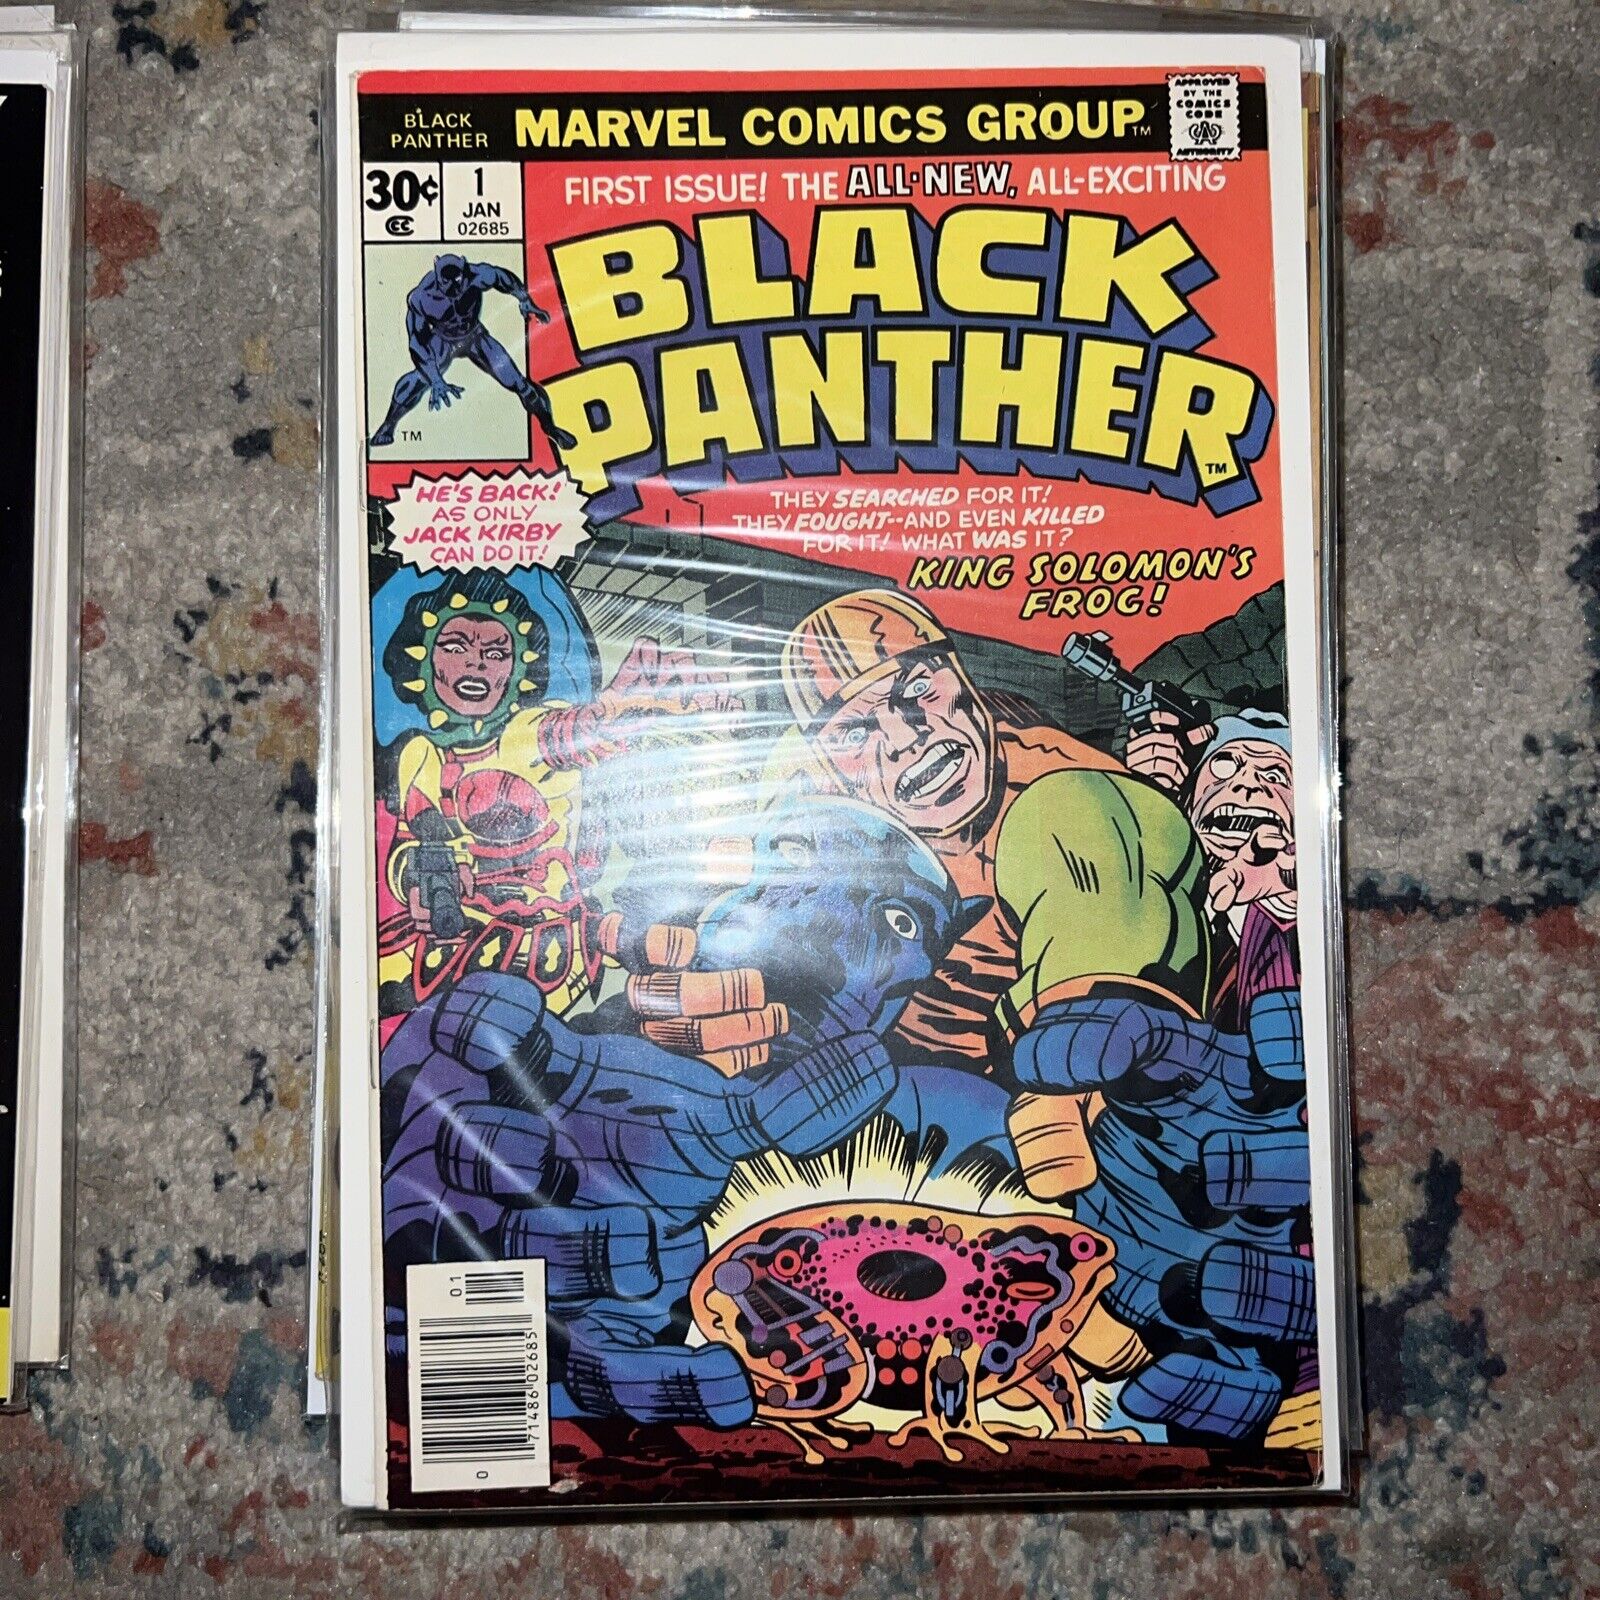 Black Panther #1 (Marvel Comics January 1977)